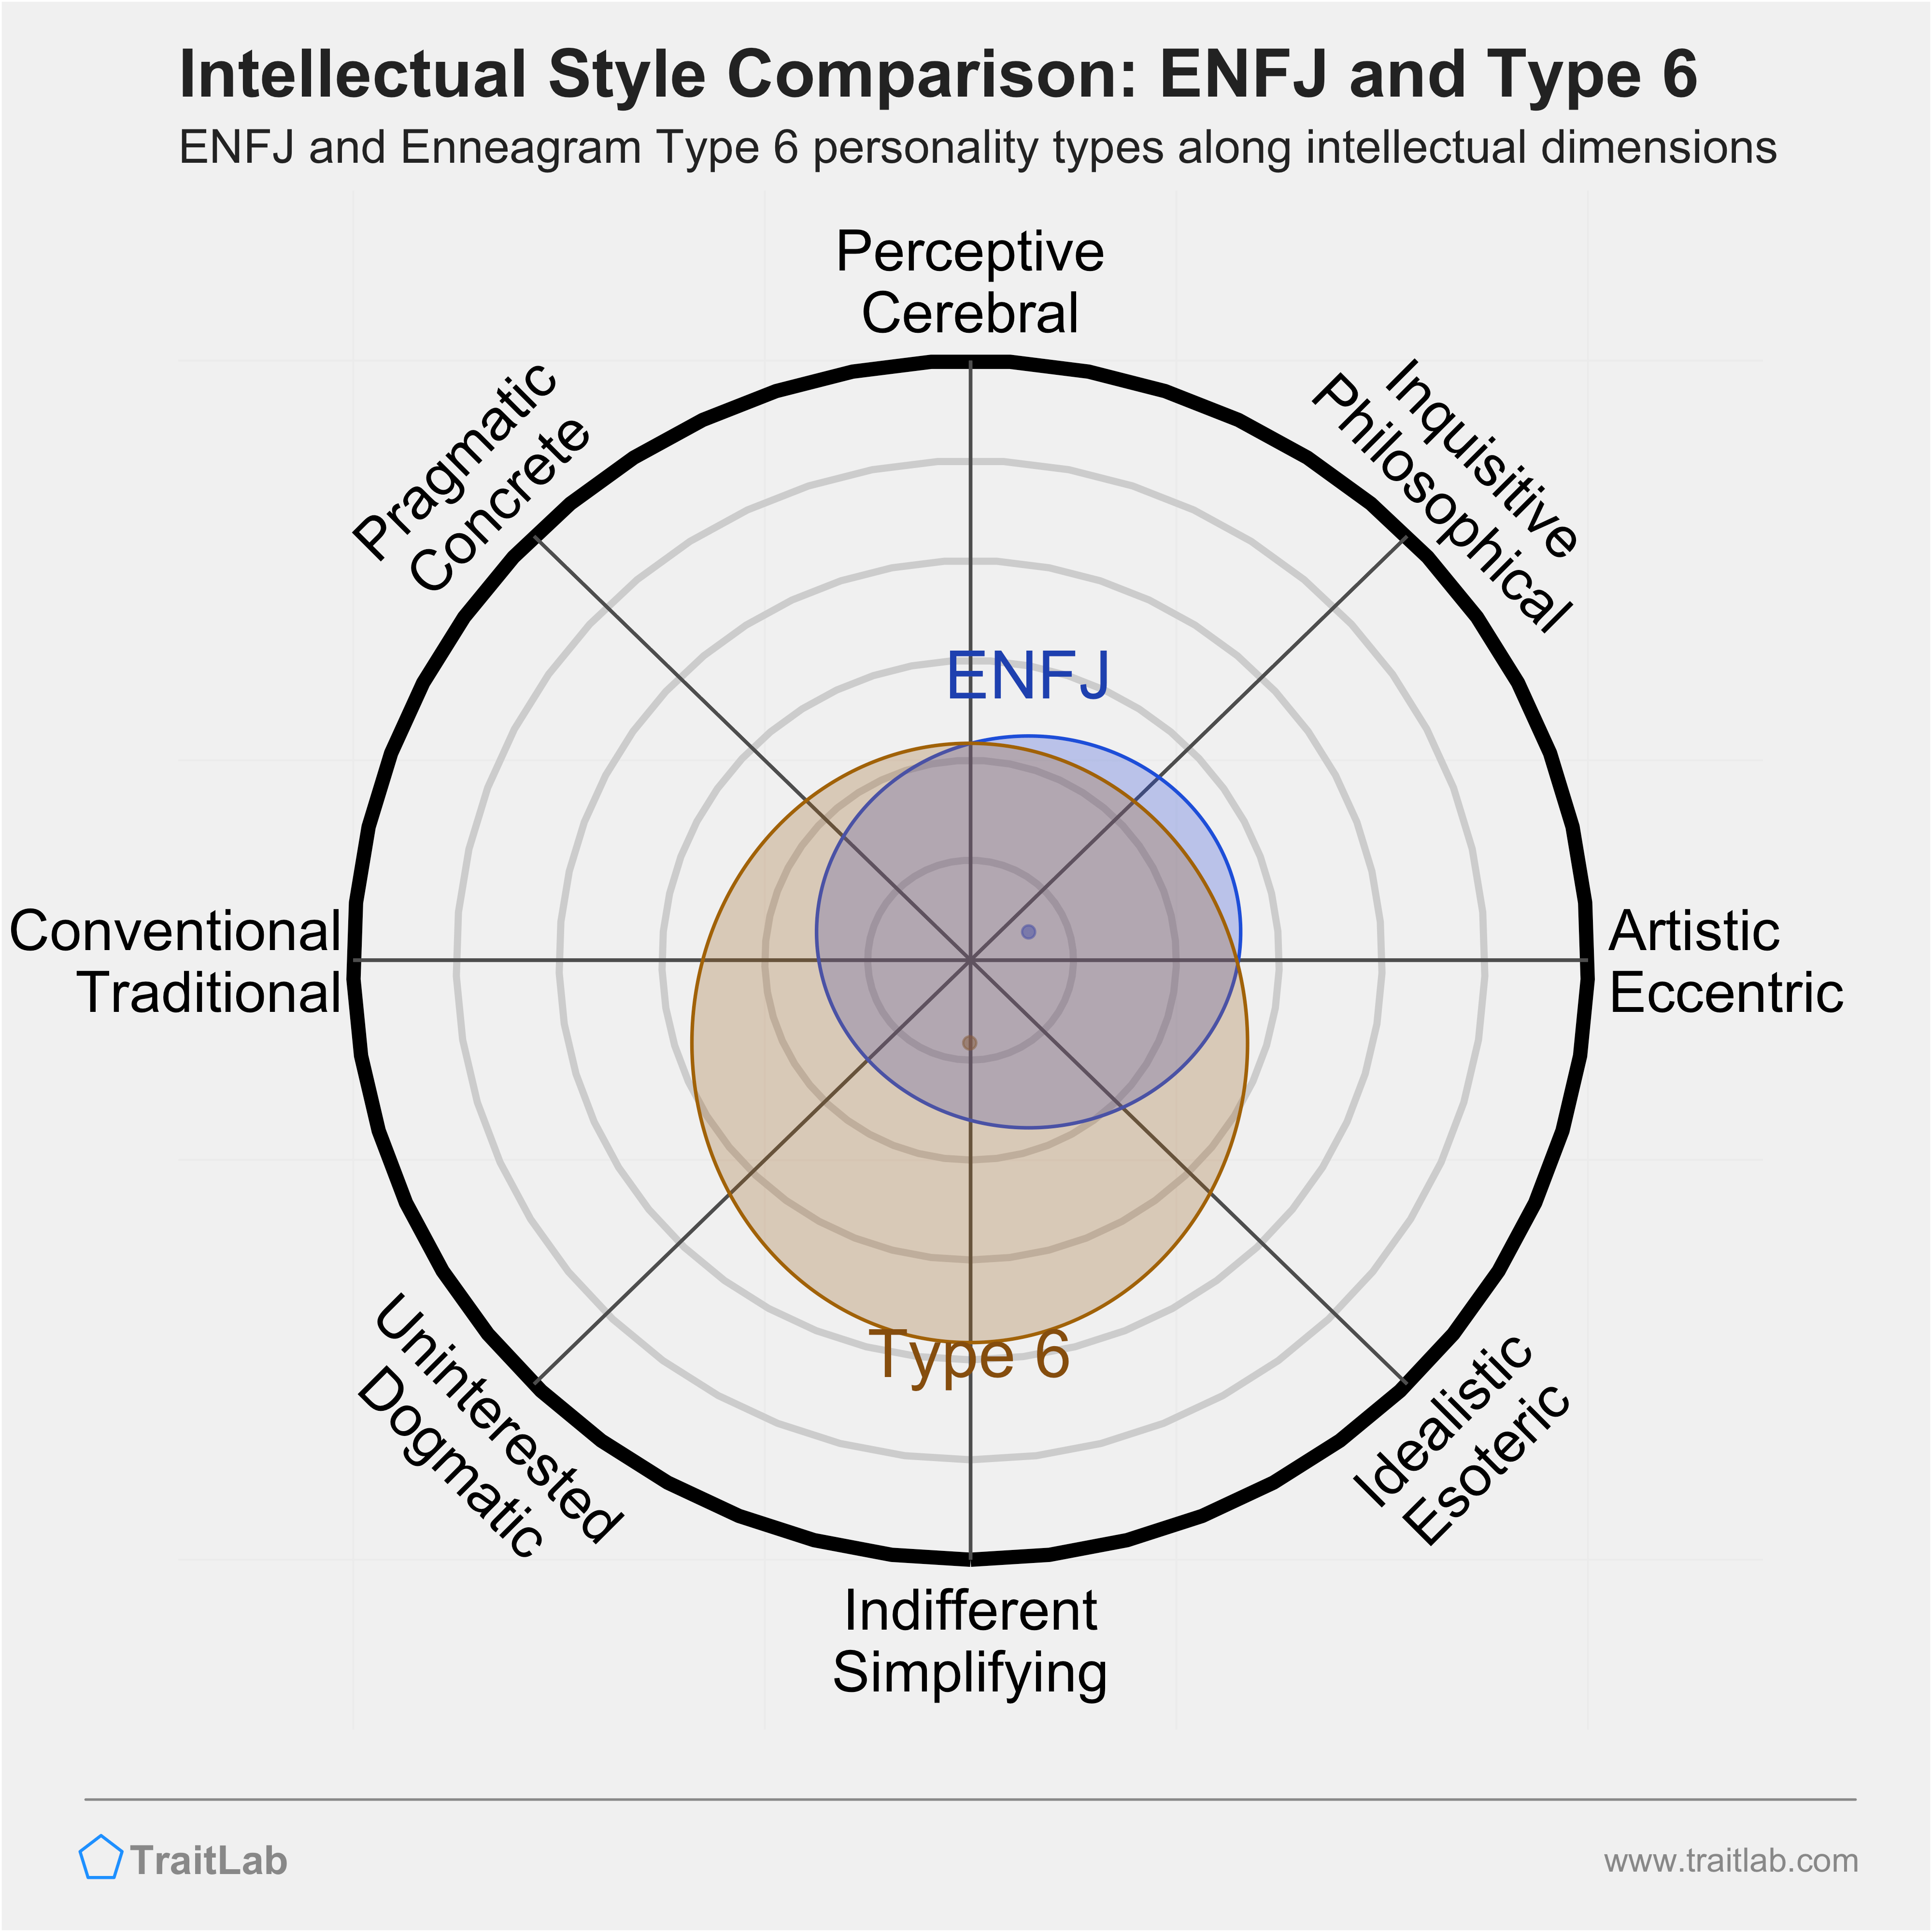 ENFJ and Type 6 comparison across intellectual dimensions